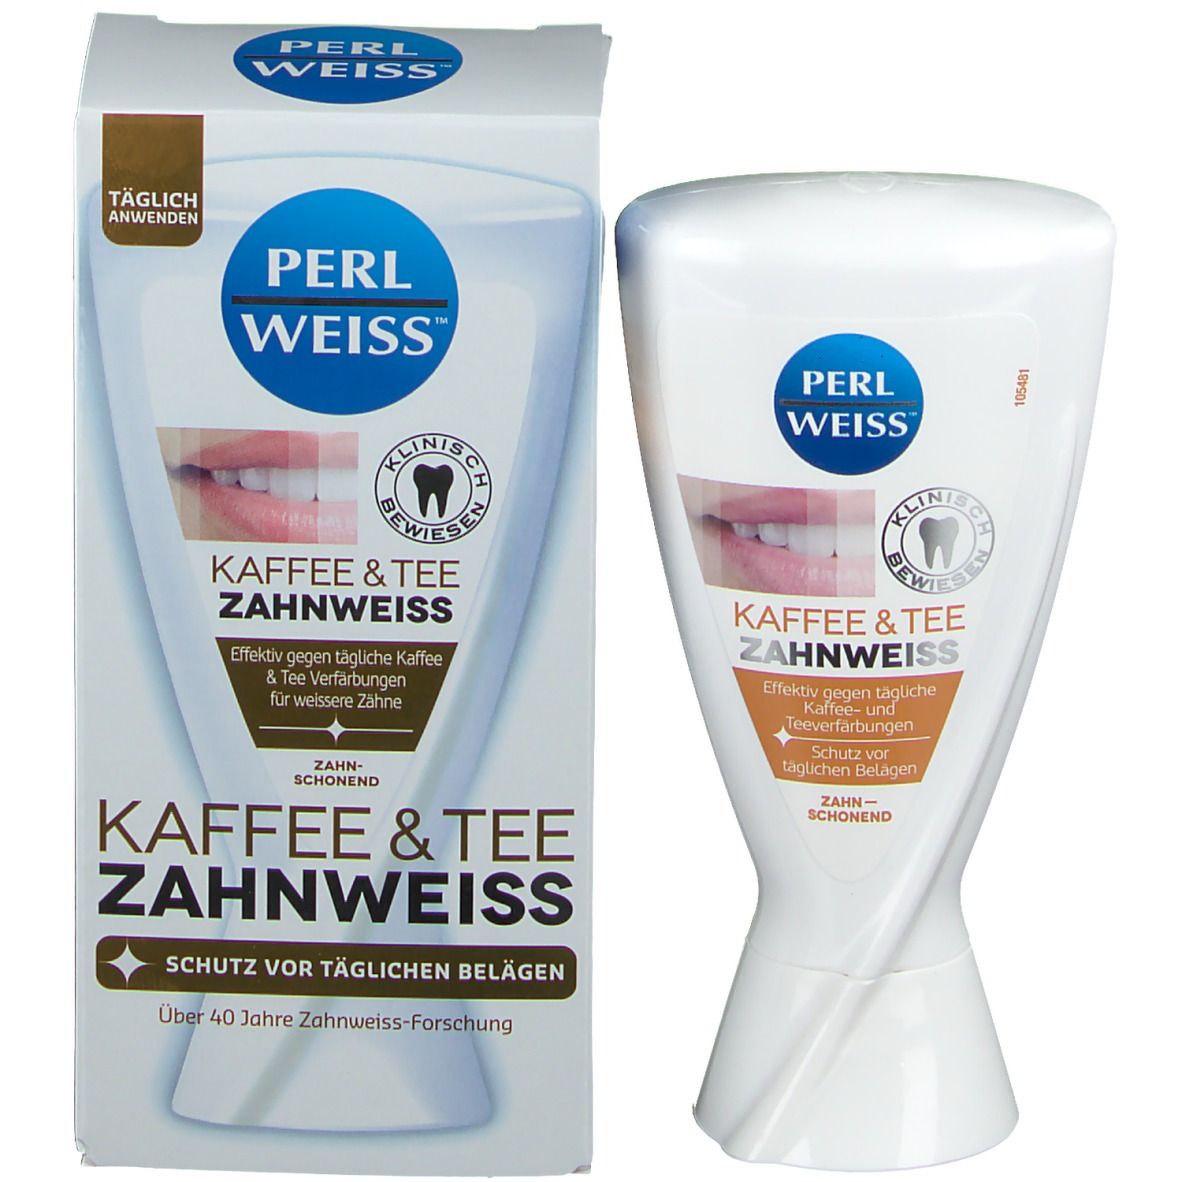 PERLWEISS® Kaffee & Tee-Zahnweiss